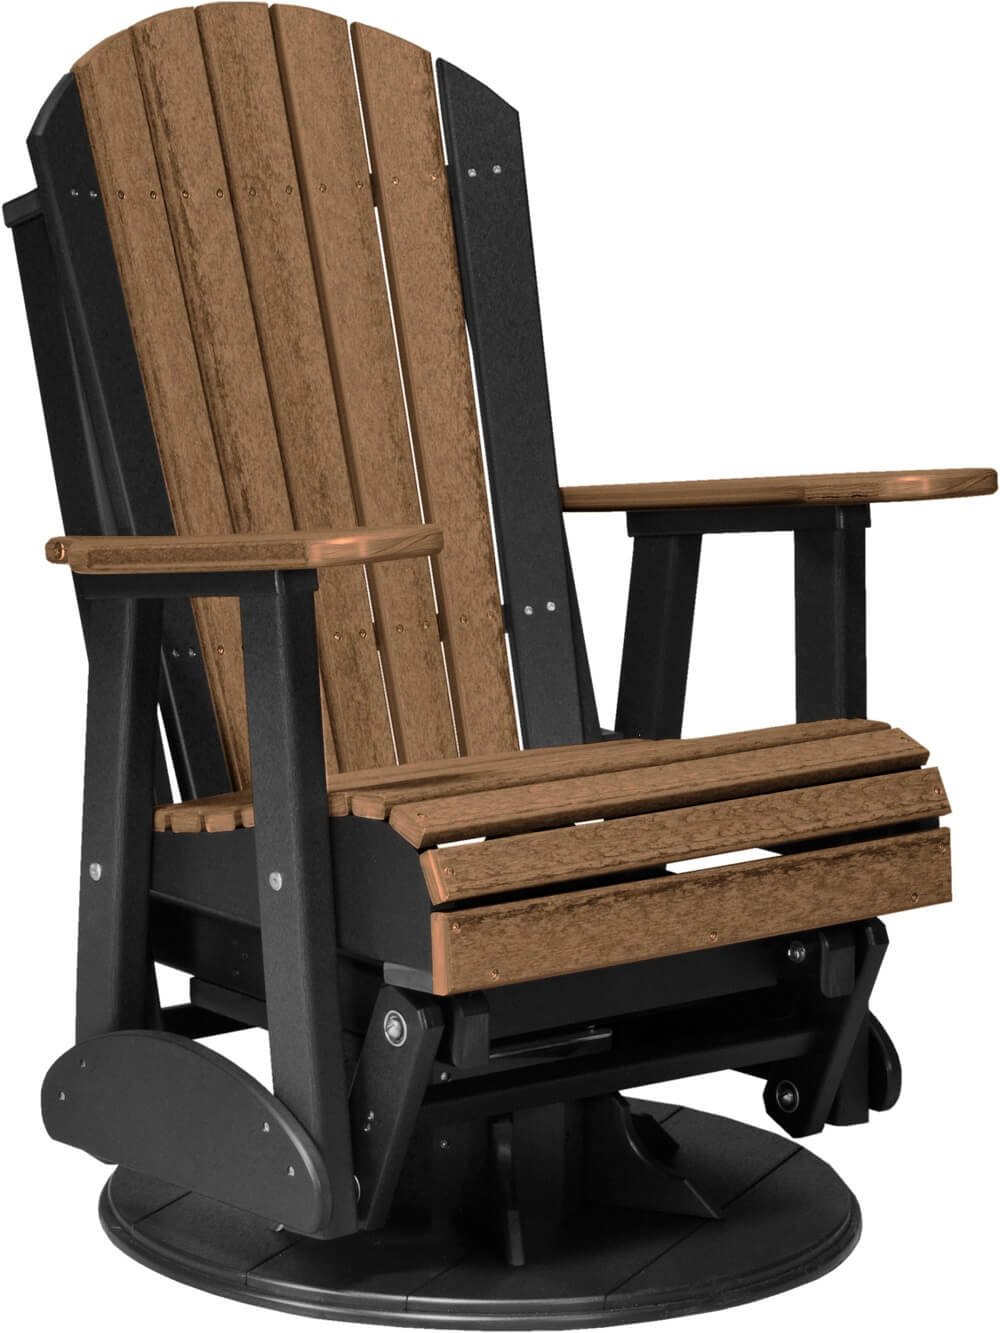 Luxcraft Adirondack Swivel Glider Chair - Antique Mahogany on Black